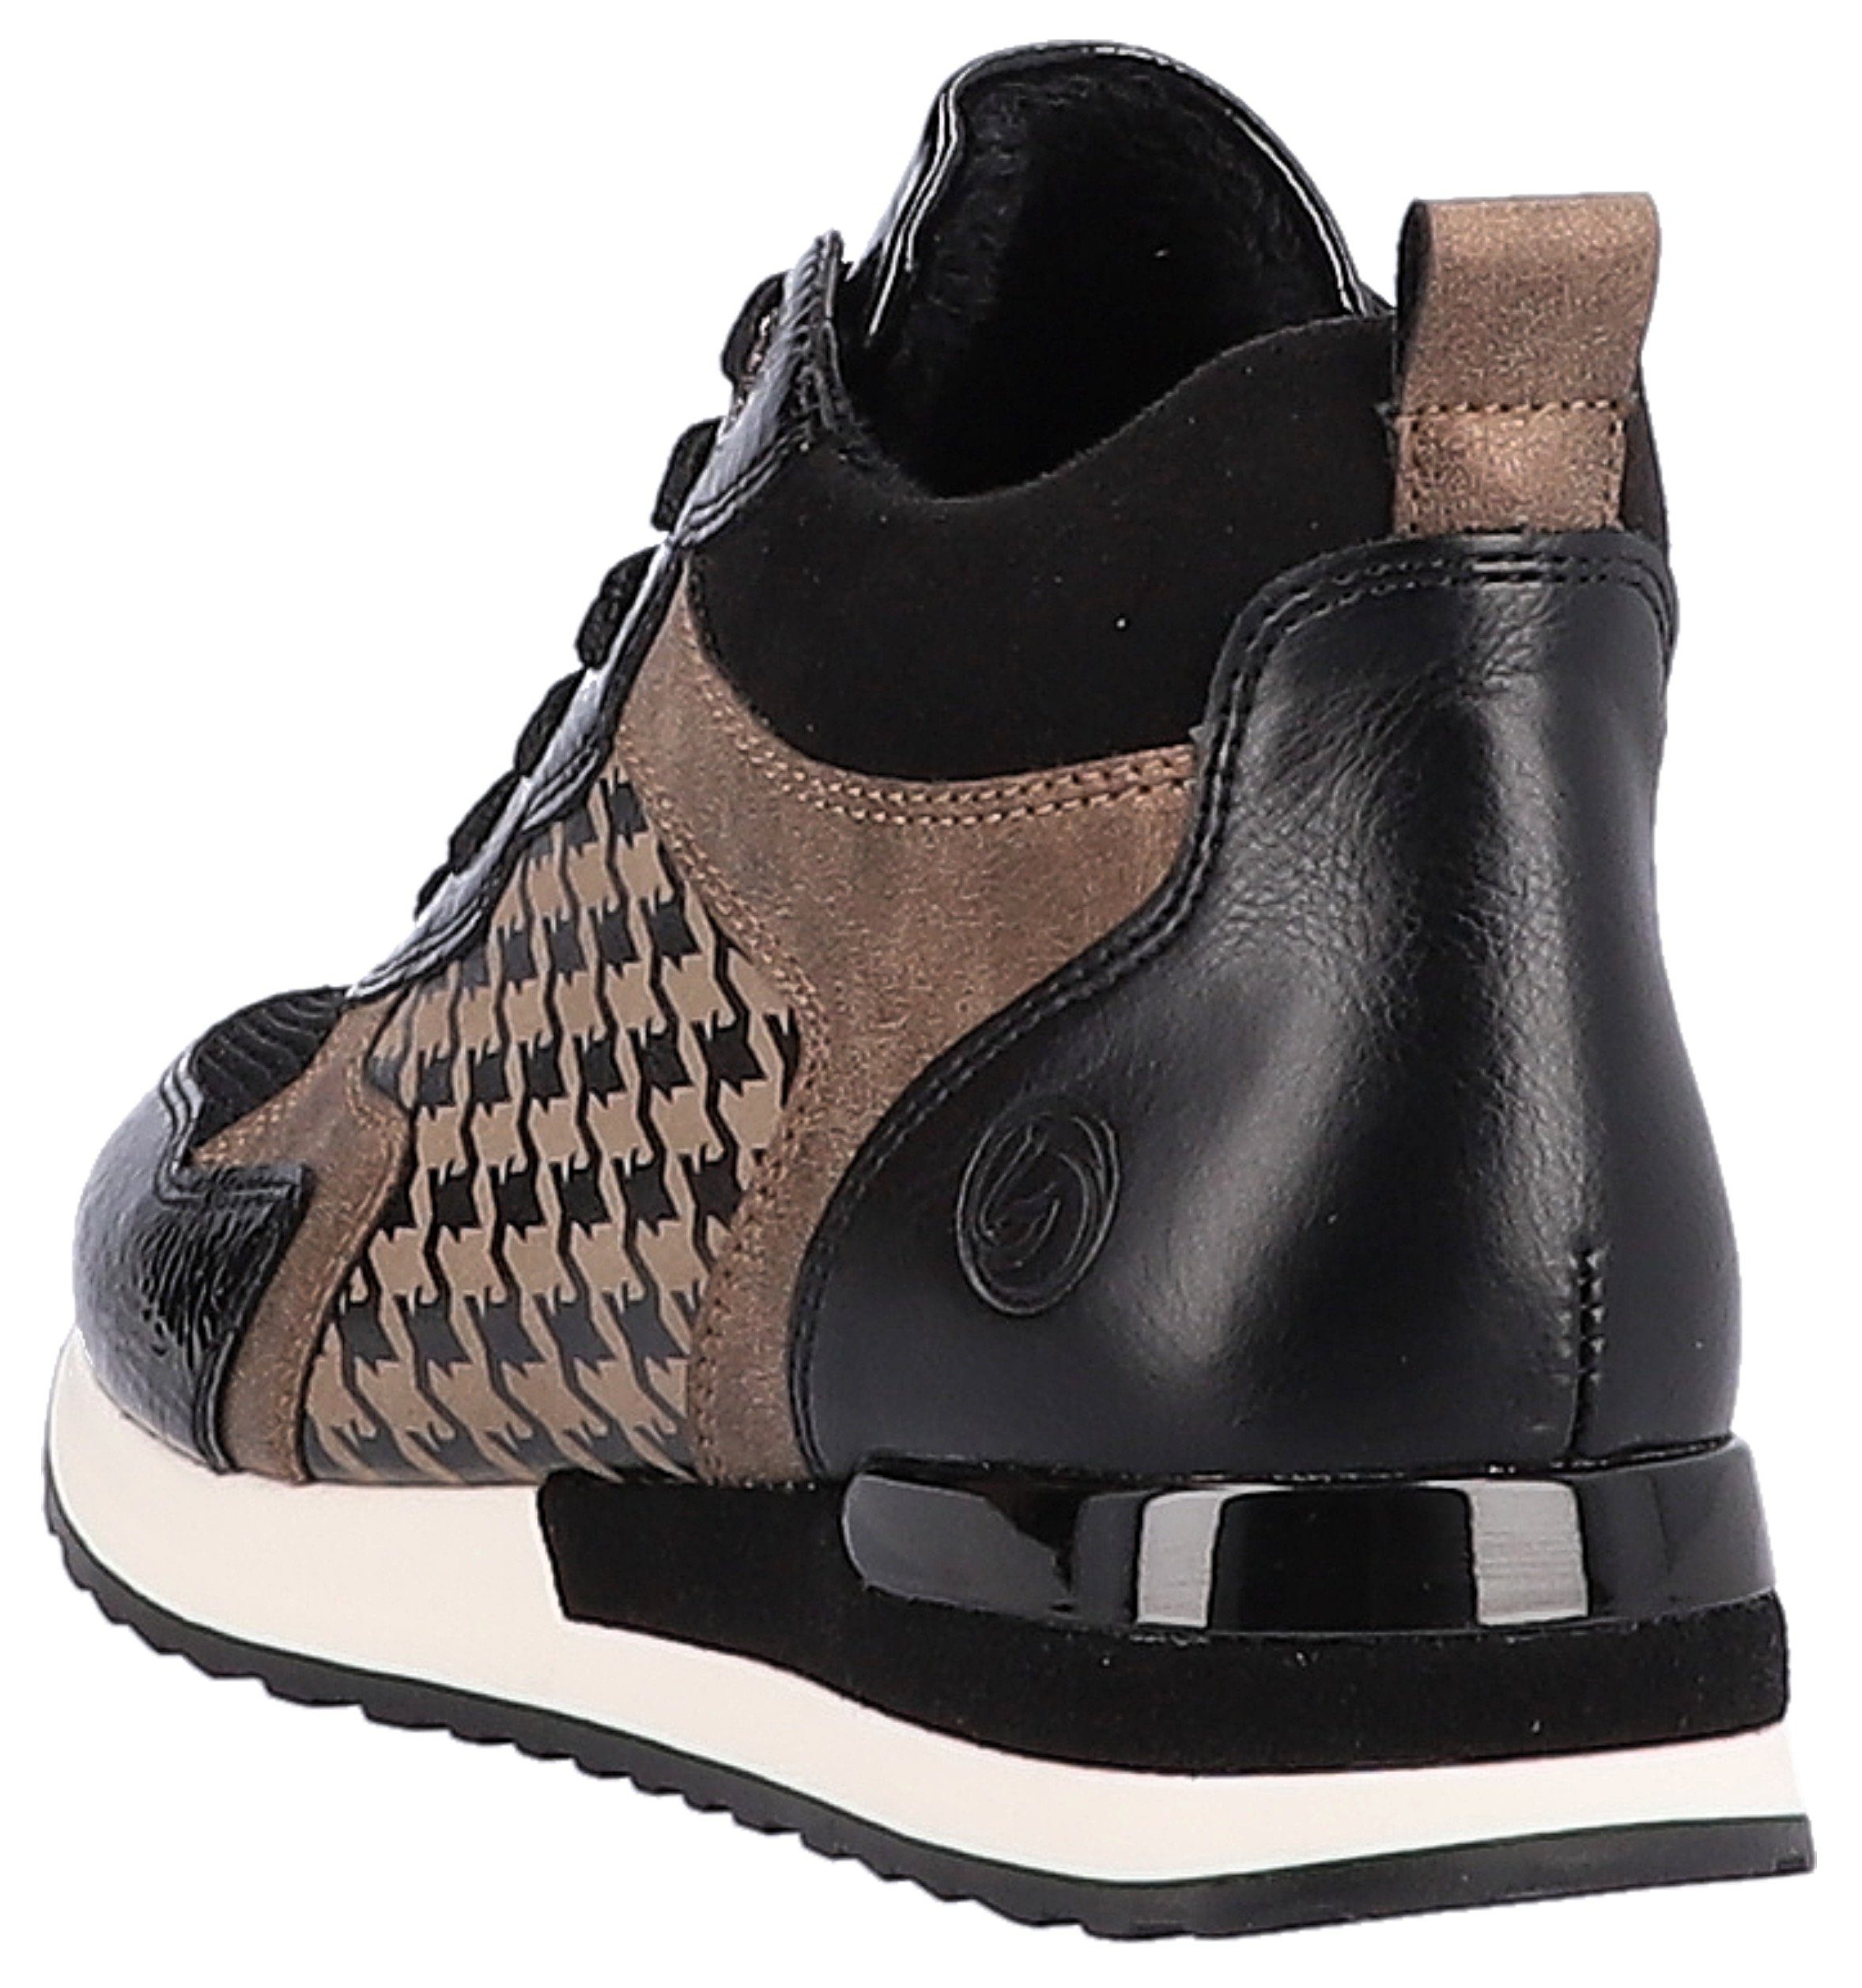 Remonte Sneaker mit trendigem Pepitaprint schwarz kombiniert